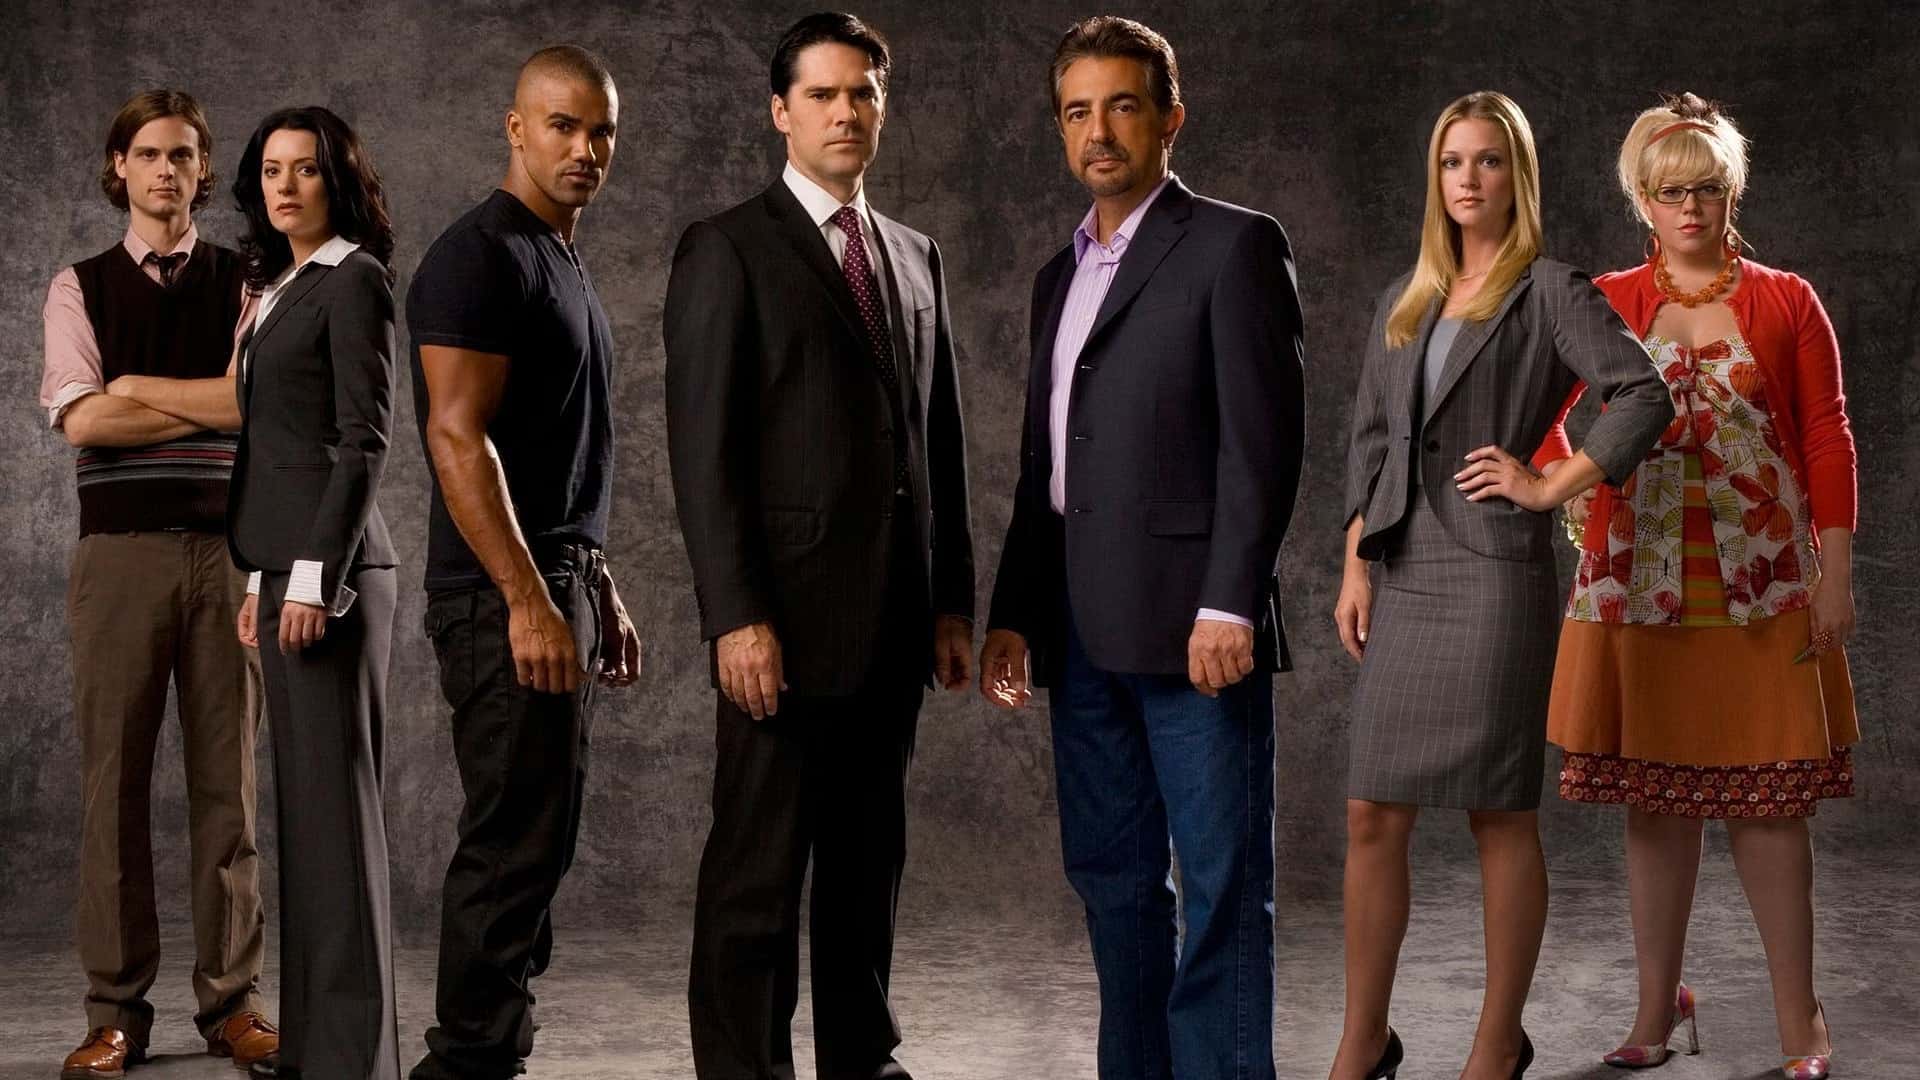 The original cast of the show, Criminal Minds (Credits: CBS)